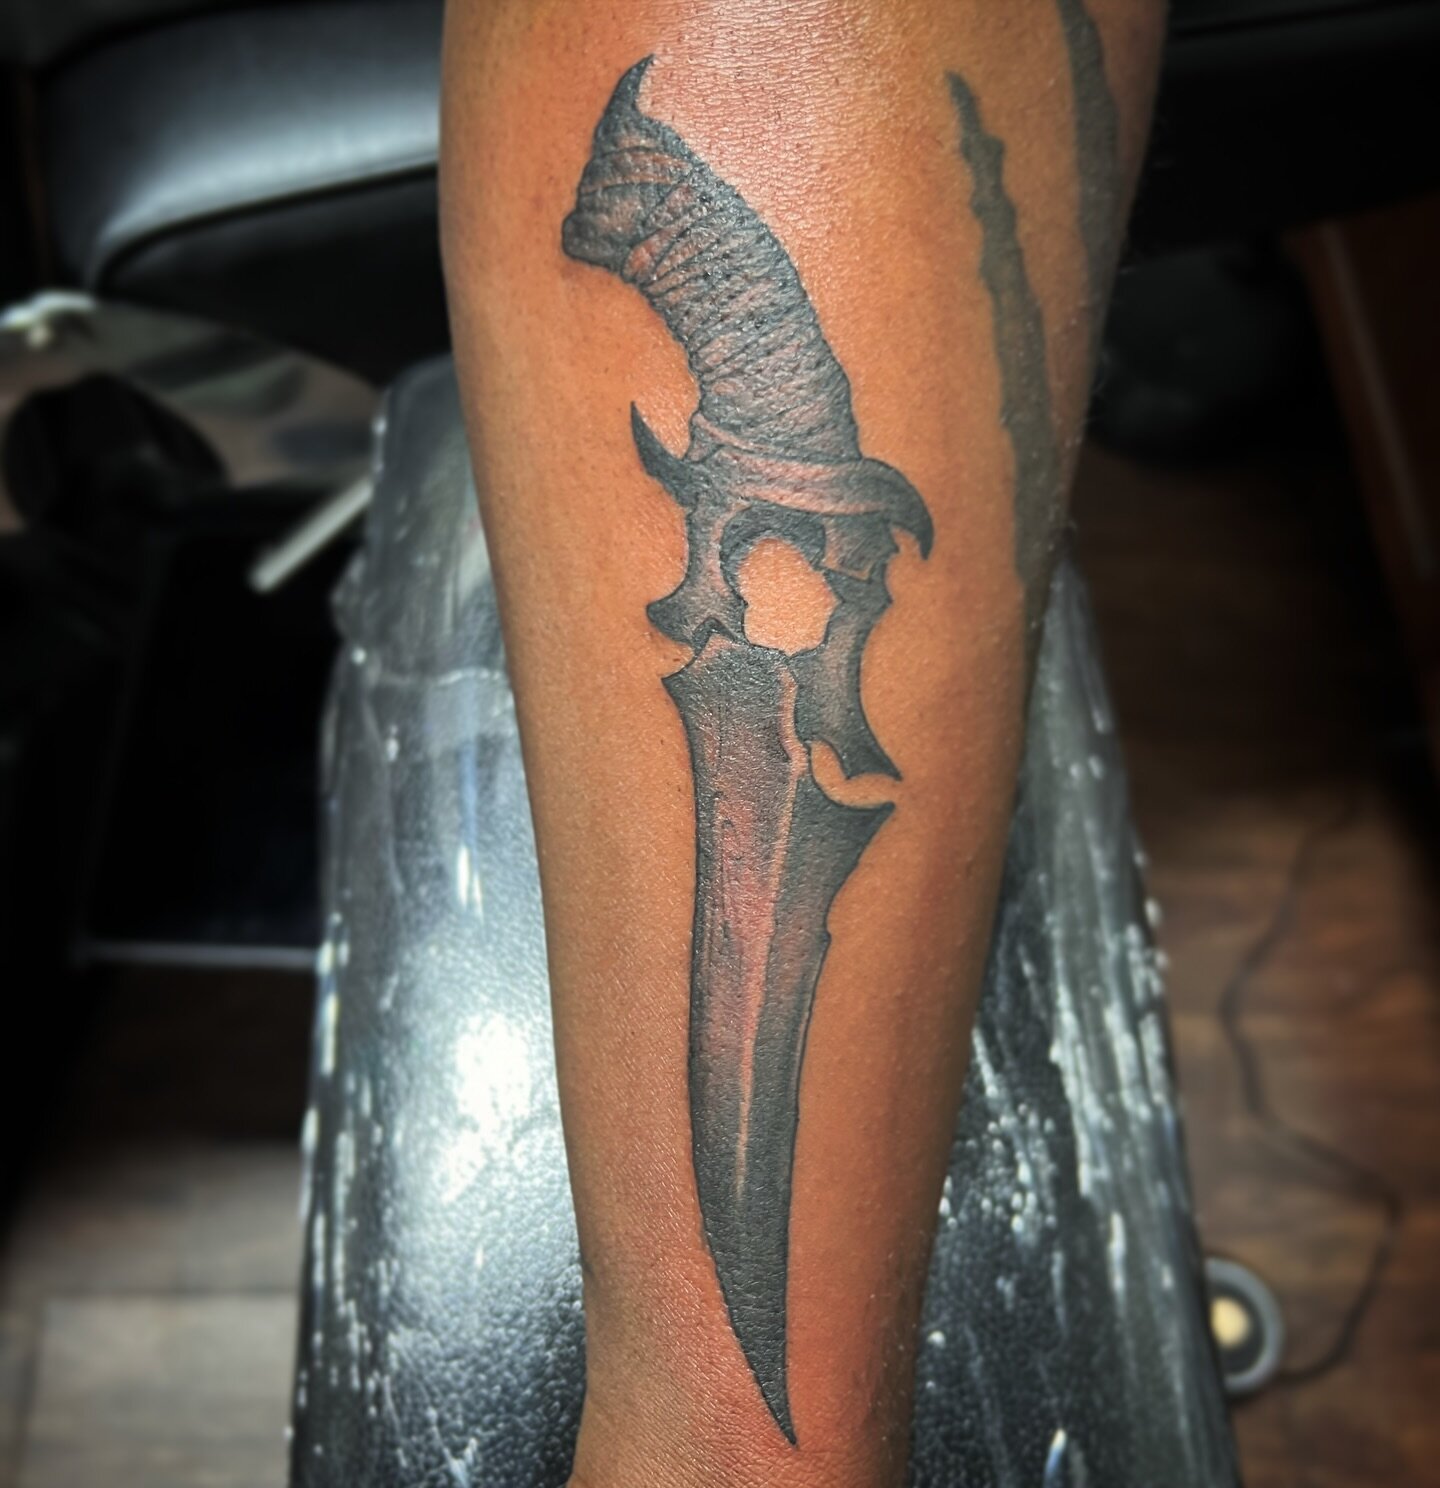 Sacrificial dagger lookin&rsquo; ass bol
.
.
.
#neotradtattoo #neotraditional #neotraditionaltattoo #tattoo #neotrad #tattoos #tattooideas #tattooed #tattooart #neotraditionaltattoos #inked #neotradsub #tattooartist #ink #tattoomodel #tattoodesign #n